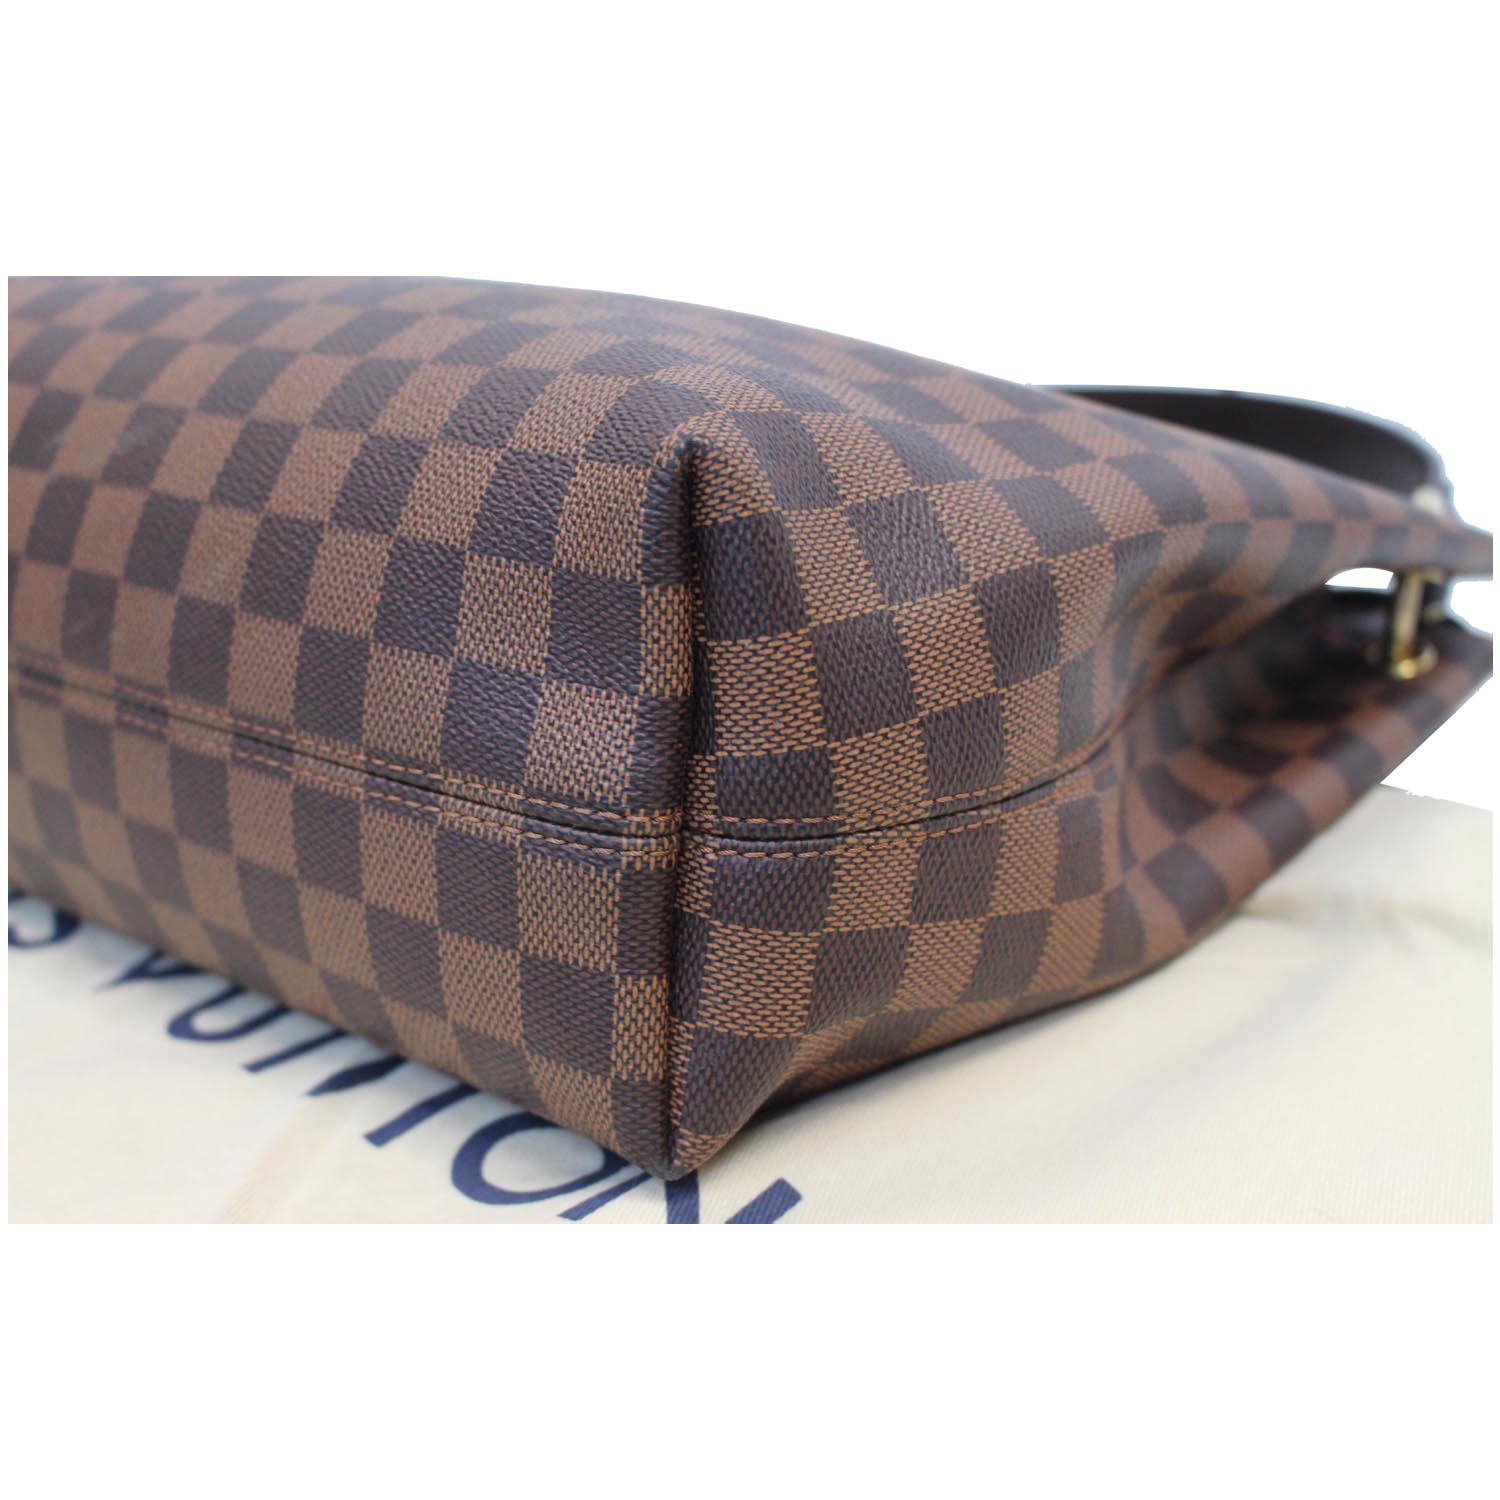 Louis Vuitton Graceful MM Bag Damier Ebene - THE PURSE AFFAIR